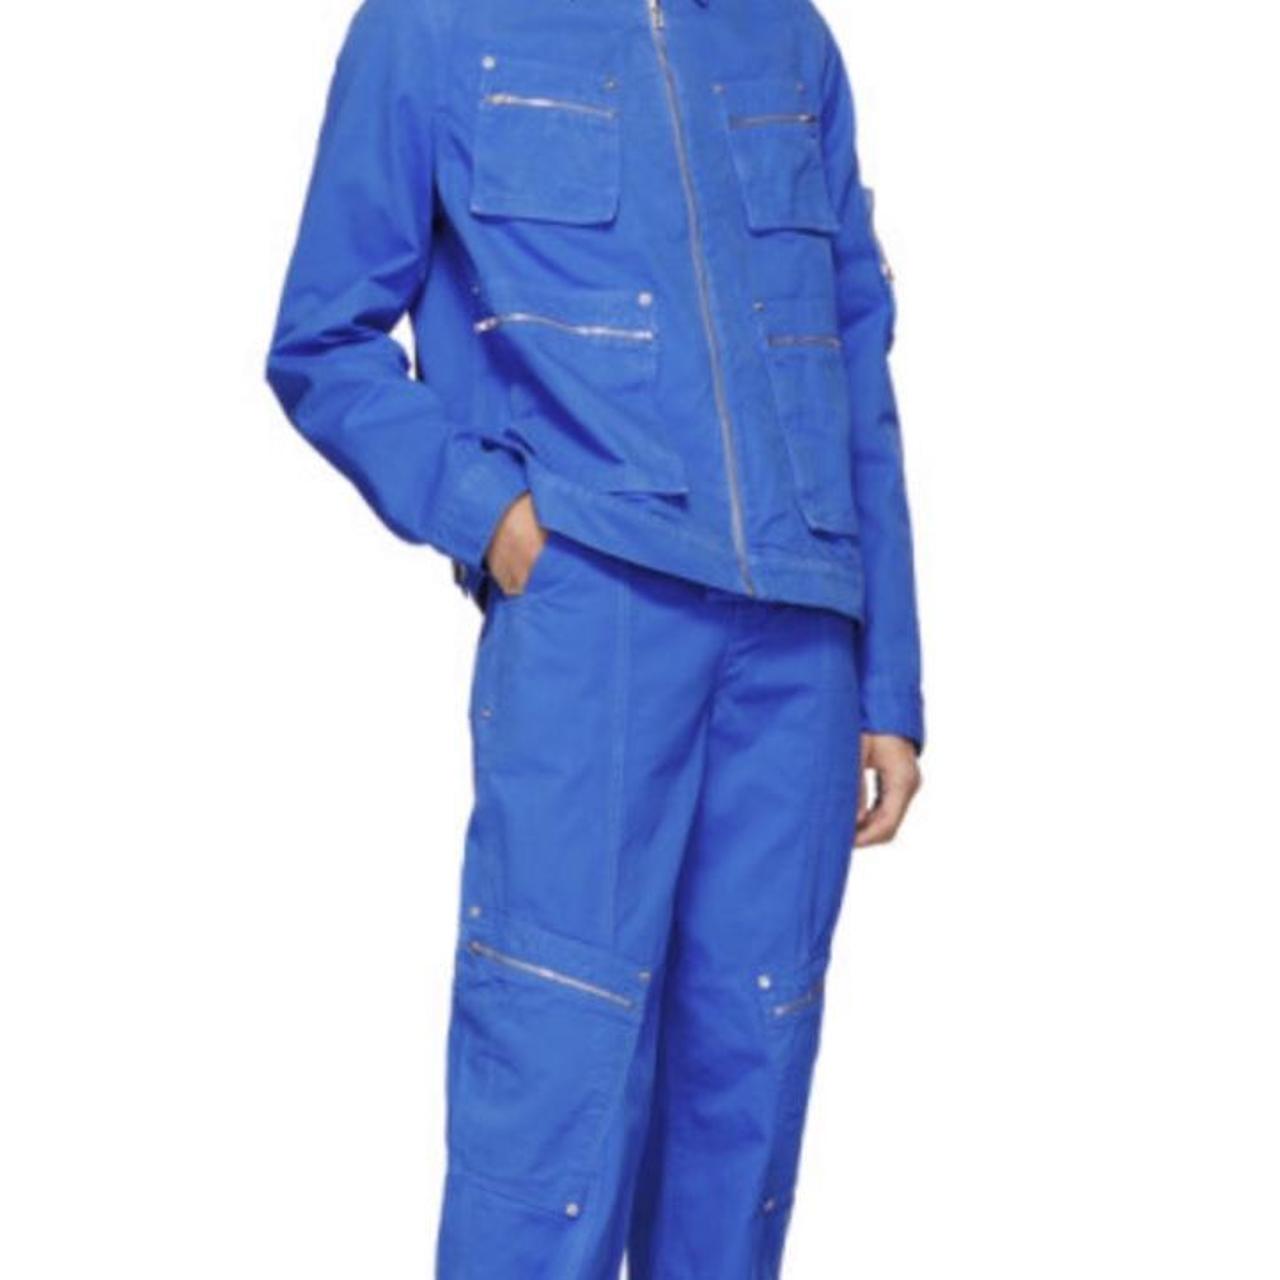 Eckhaus Latta Men's Blue Trousers (2)